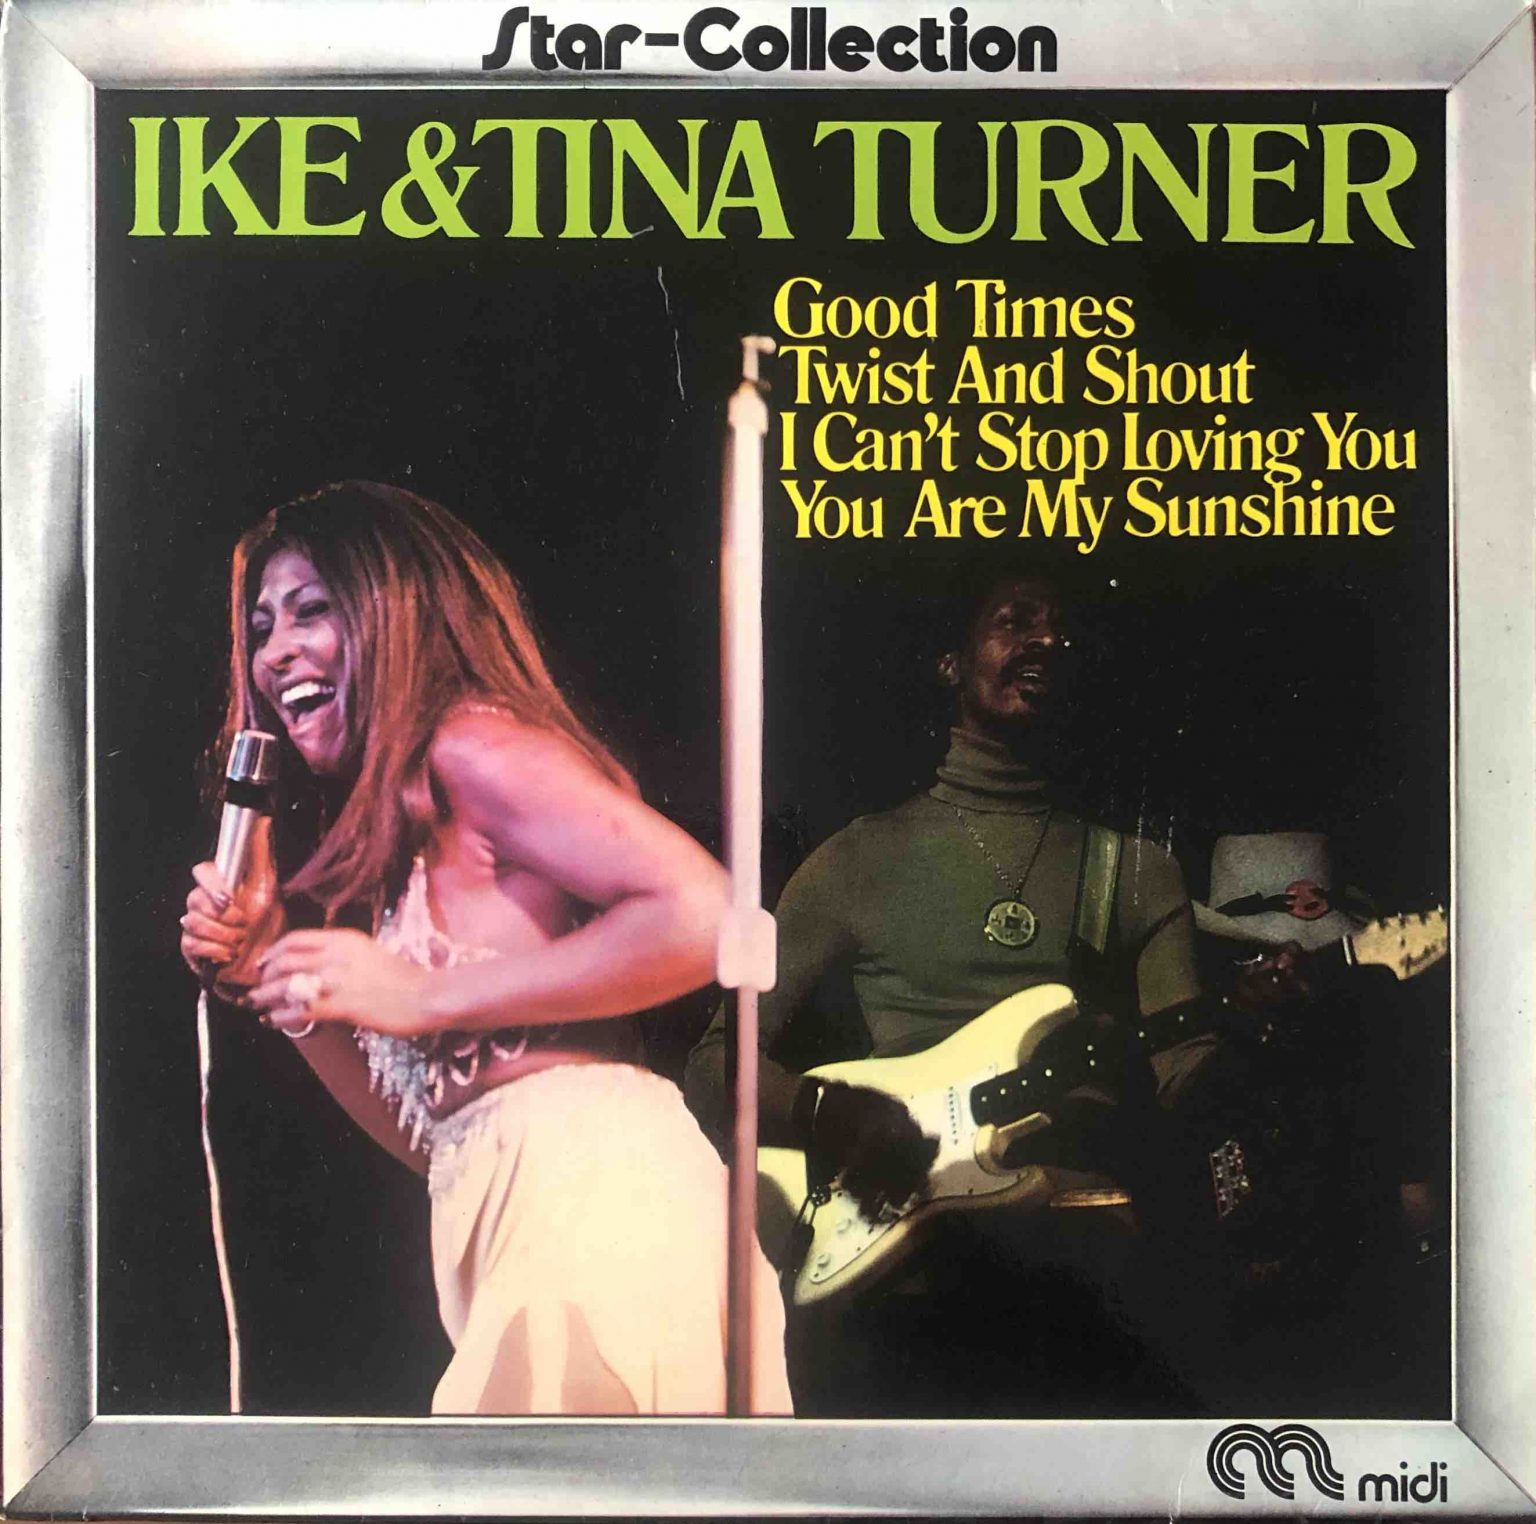 Ike & Tina Turner – Star-Collection LP